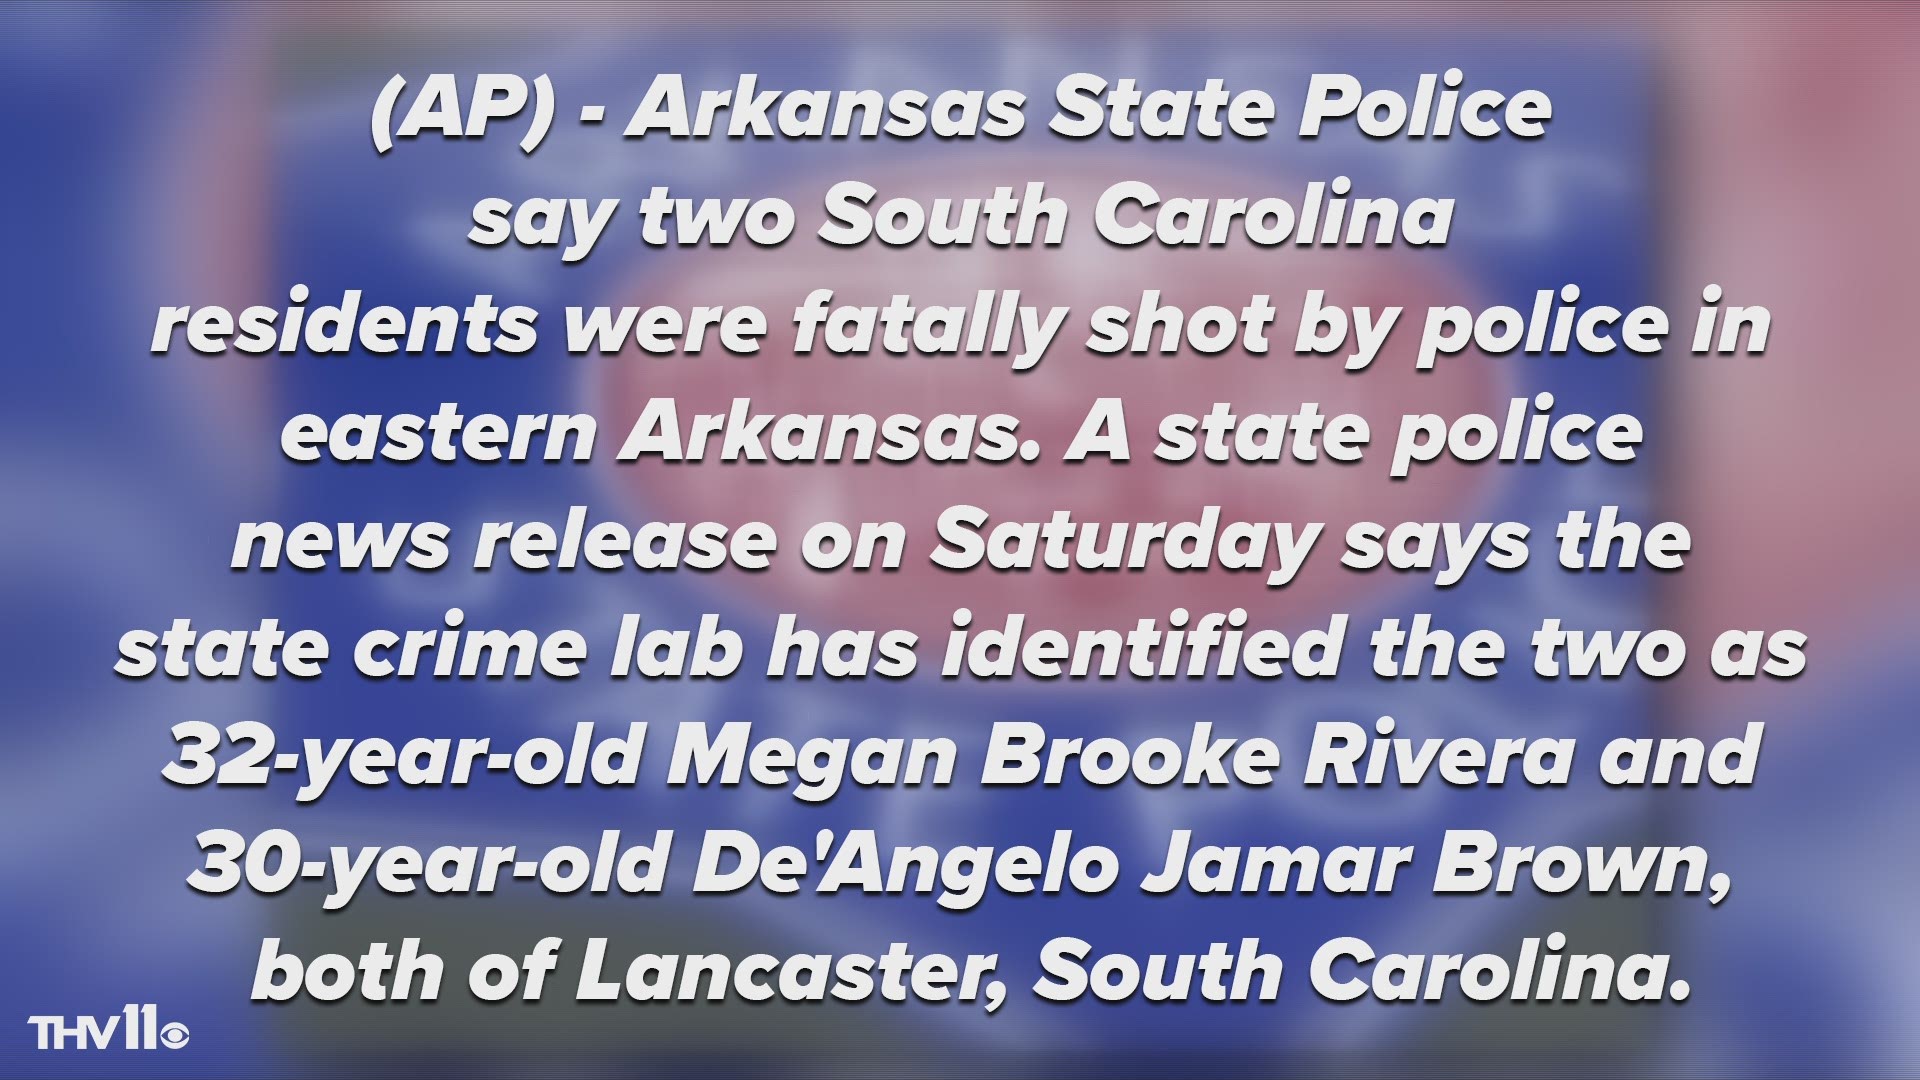 South Carolinians fatally shot by police in eastern Arkansas